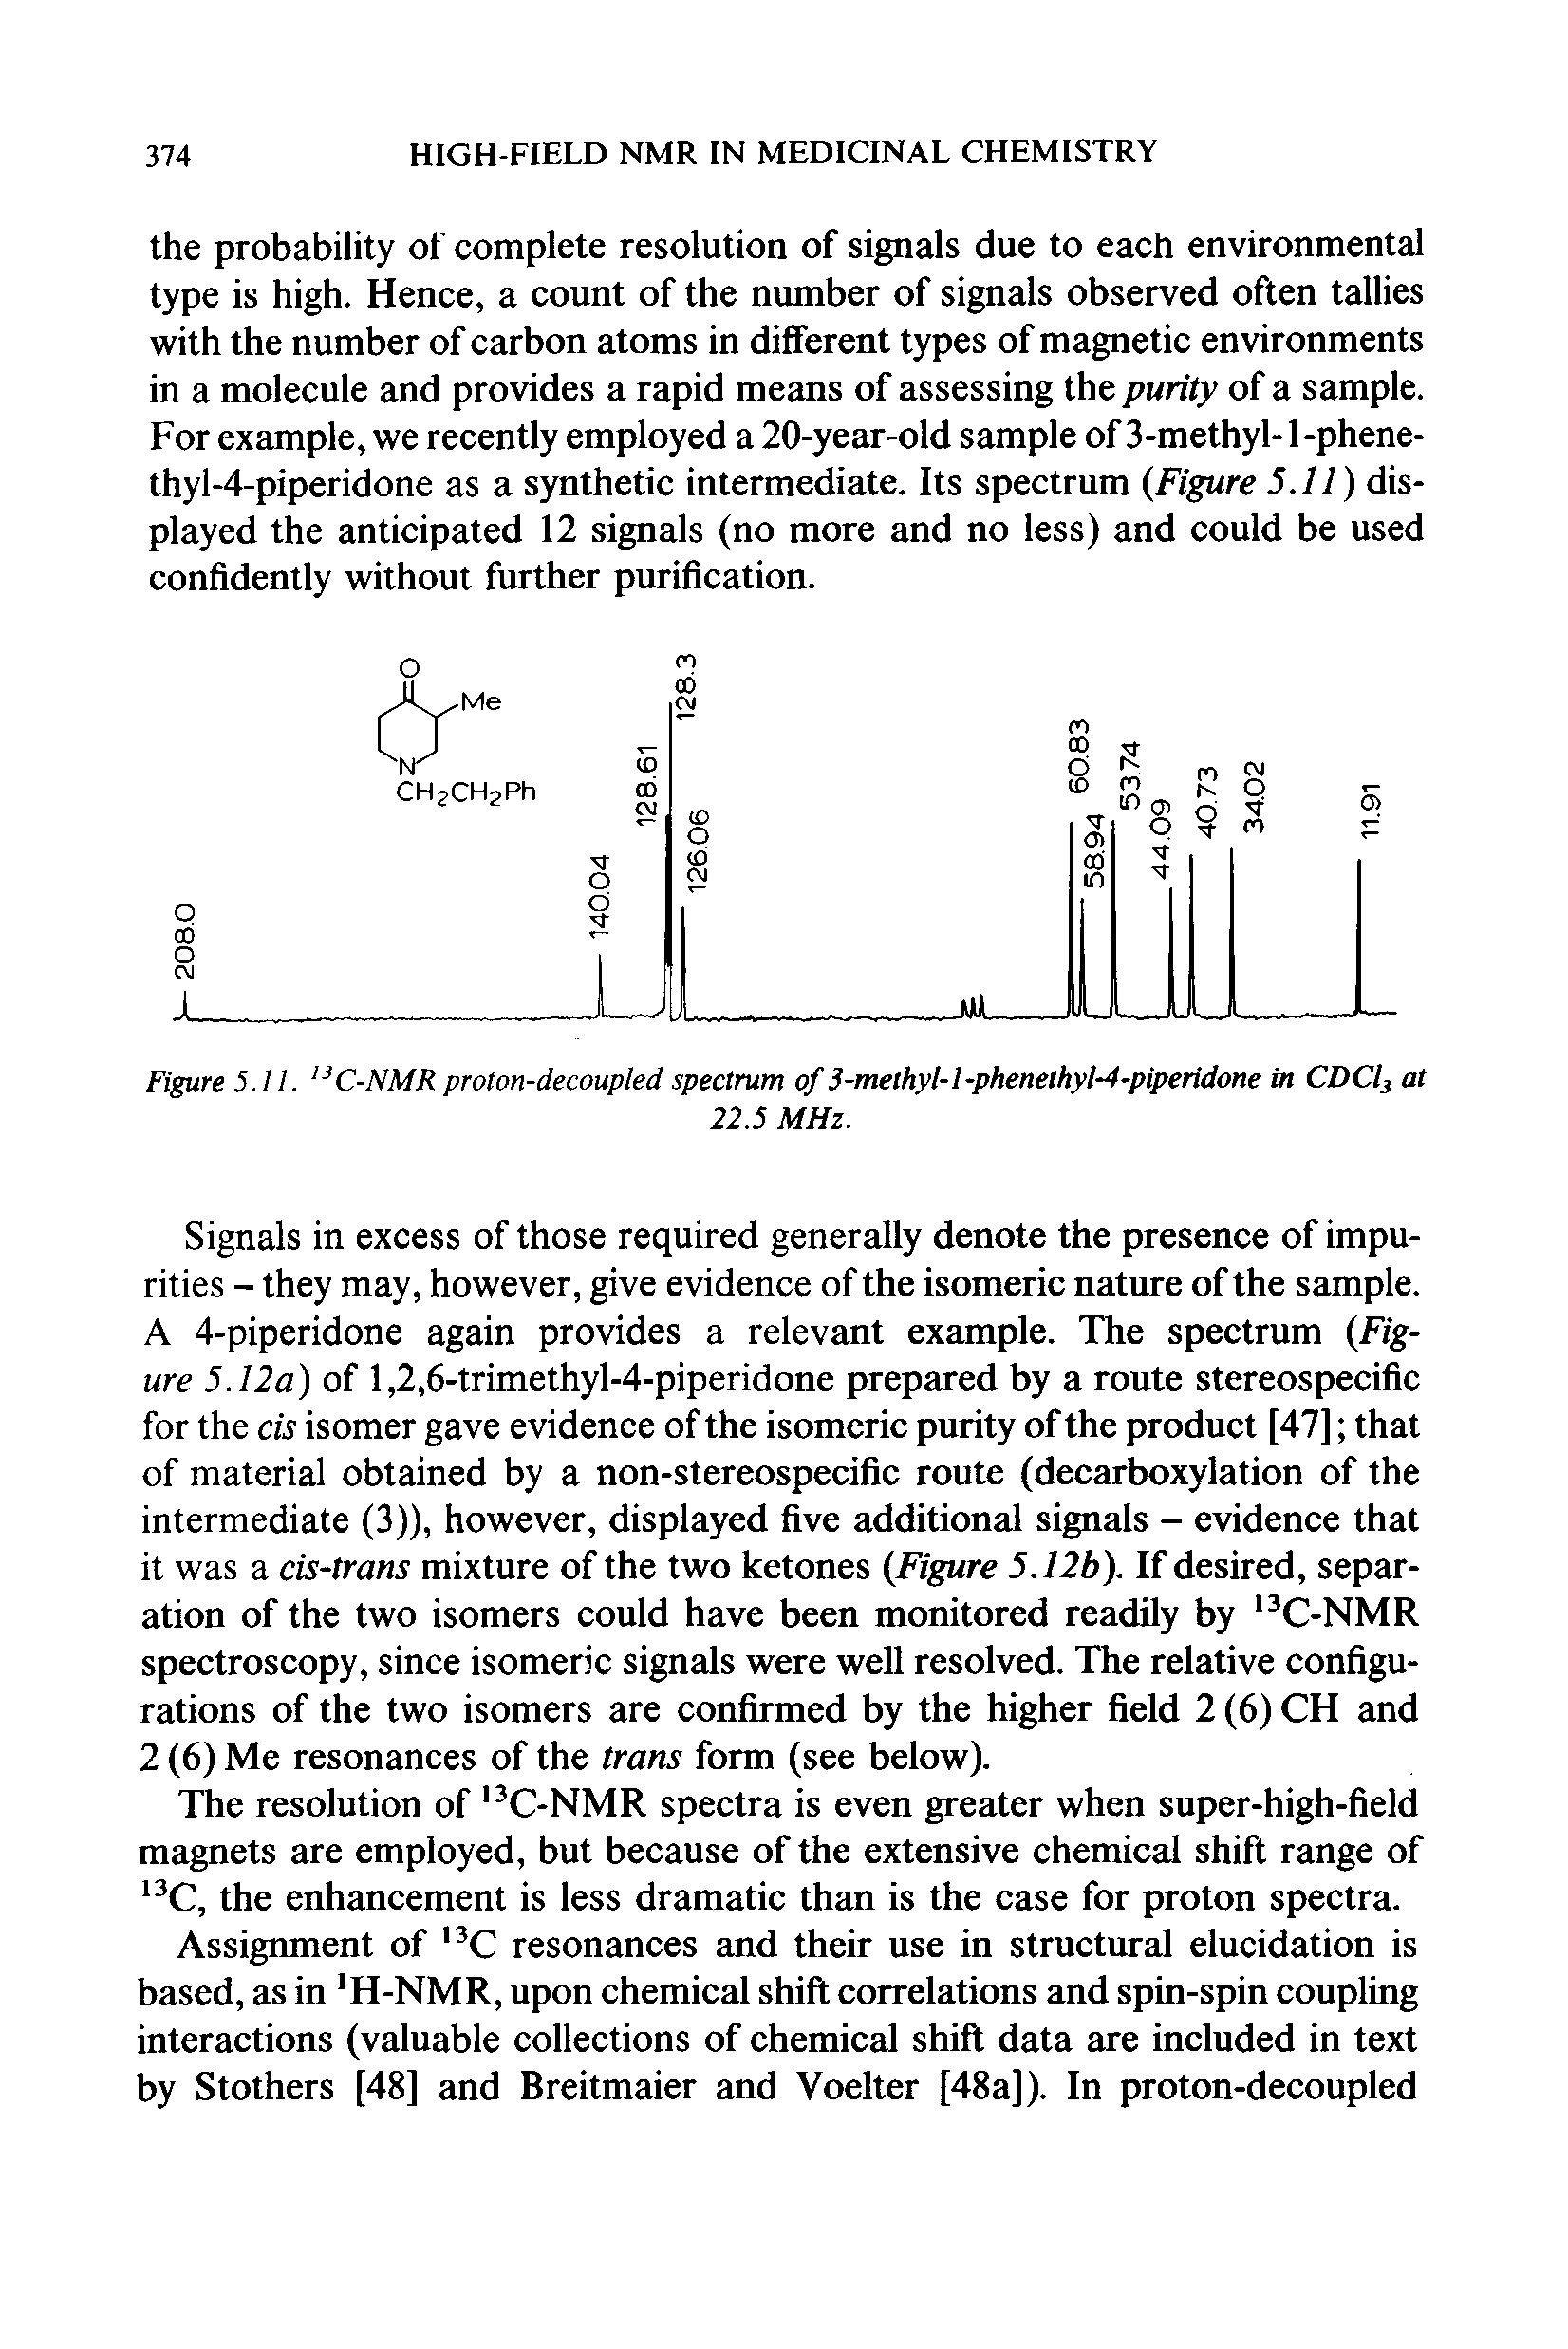 Figure 5.11. C-NMR proton-decoupled spectrum of 3-methyl-1-phenelhyl-4-piperidone in CDCtj at...